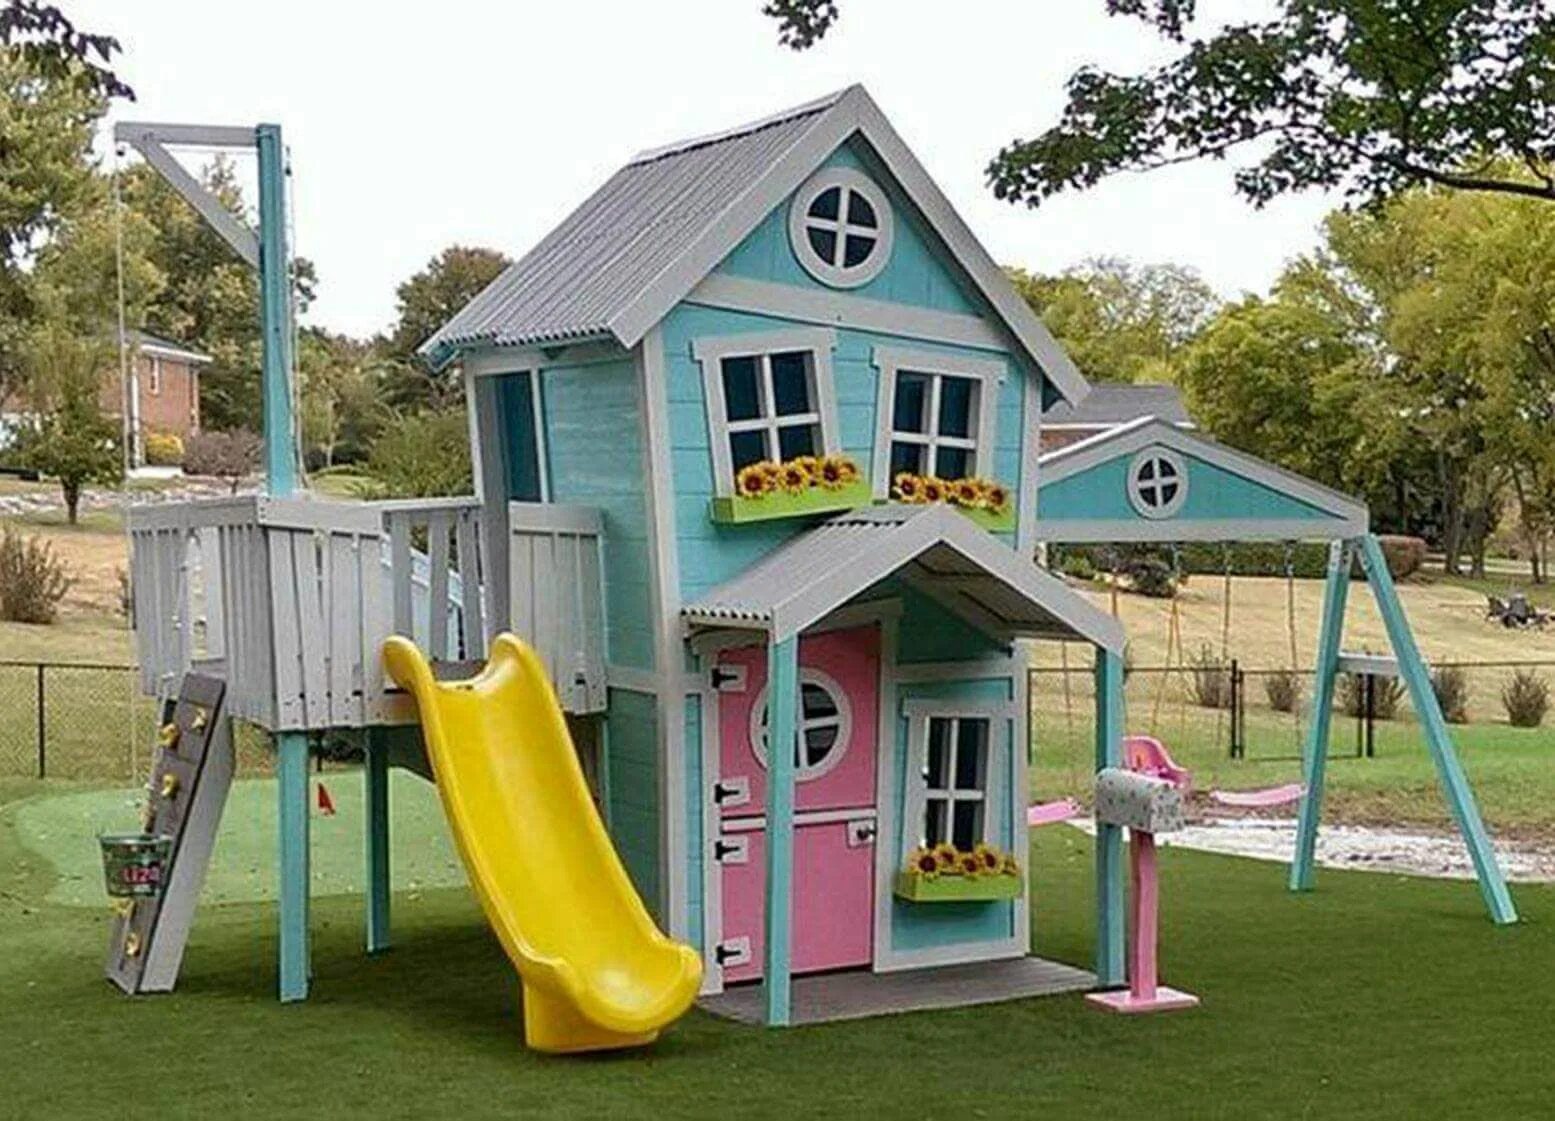 Alfred play house. Домик для детей. Детский домик для дачи. Домик во дворе для детей. Детская площадка с домиком.